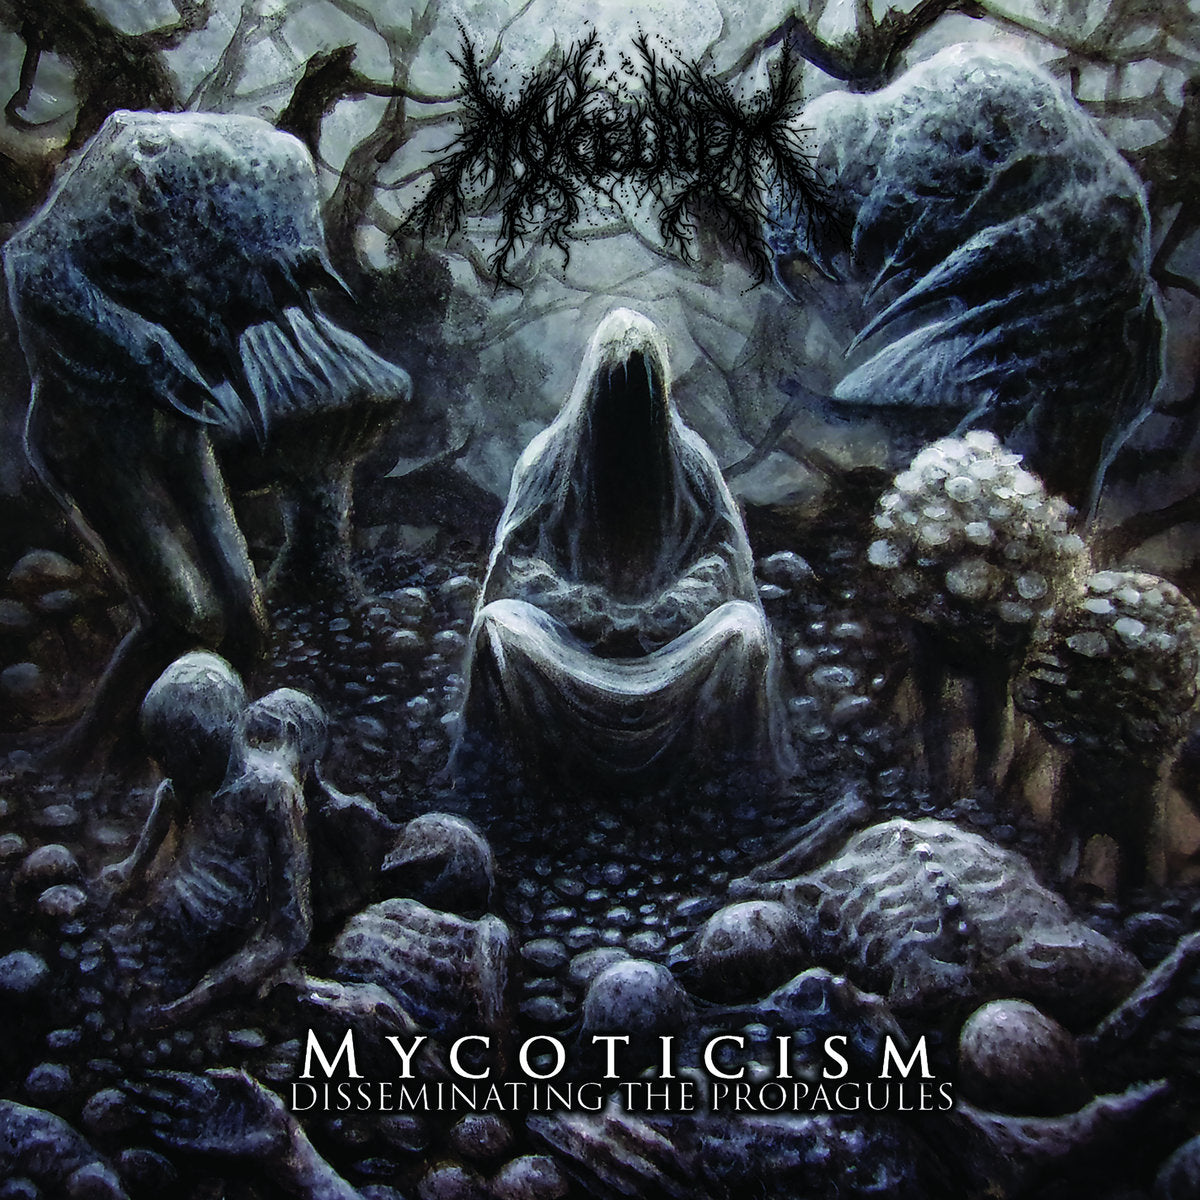 Mycelium - Mycoticism (Disseminating the Propagule)s CD